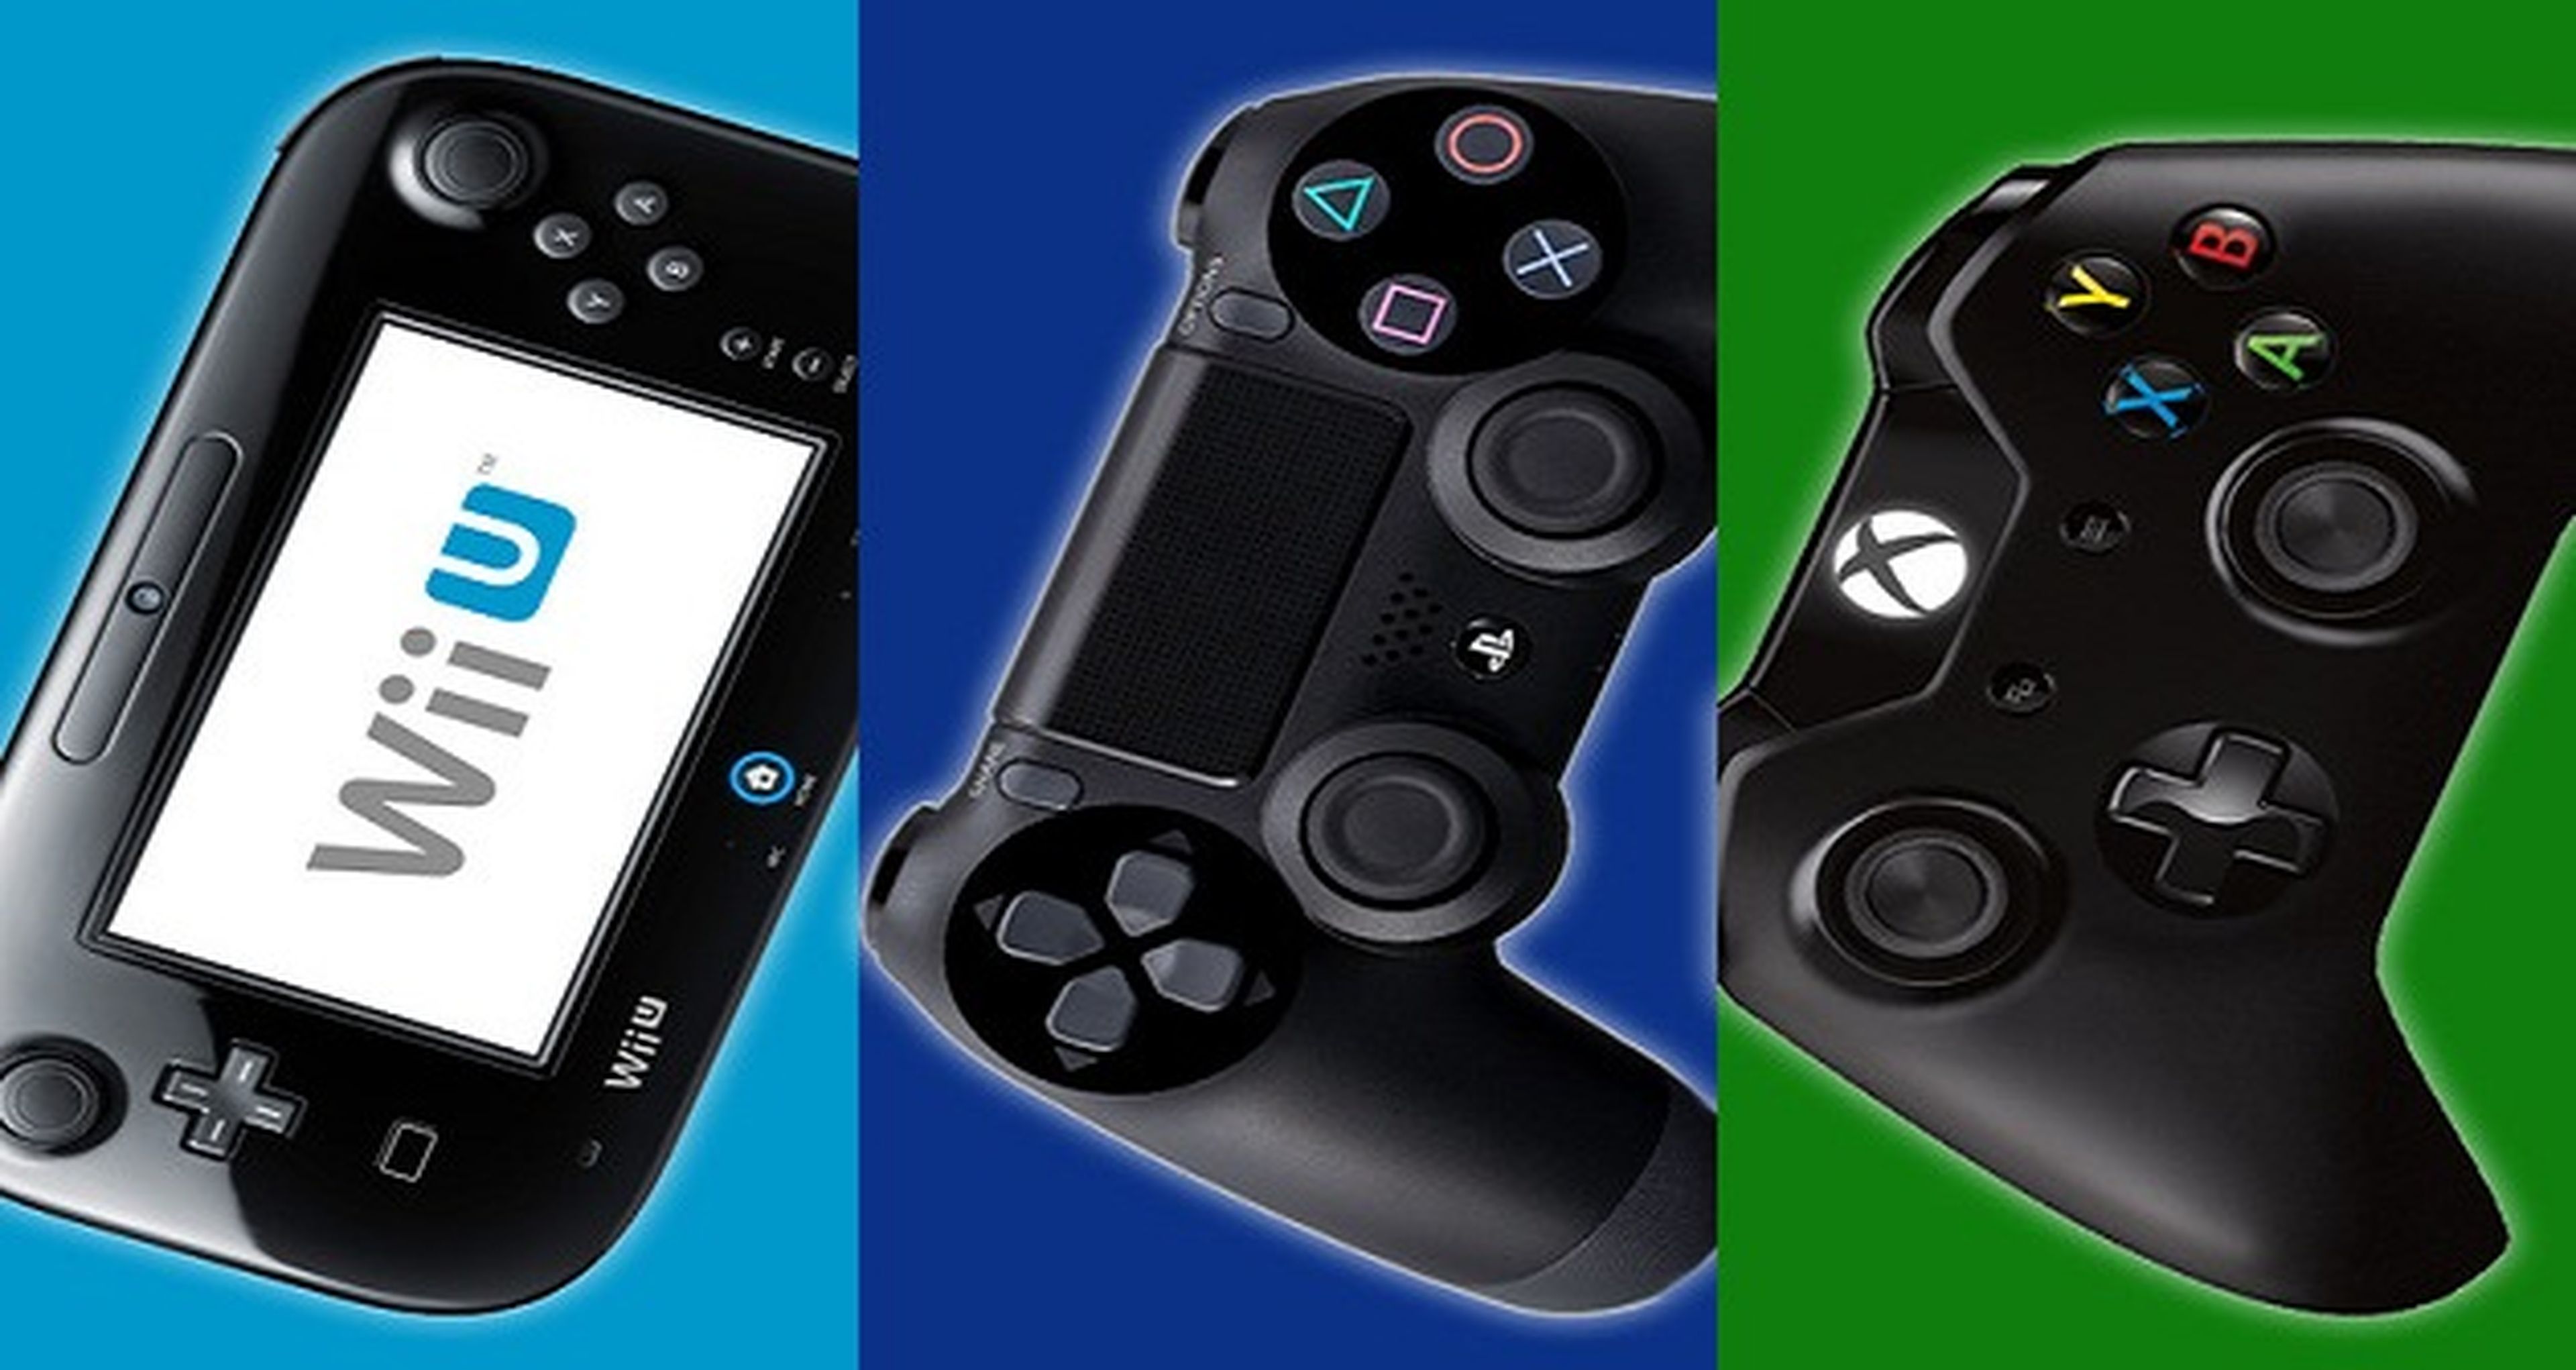 PS4 vs Xbox One vs Wii U: sus ventas totales